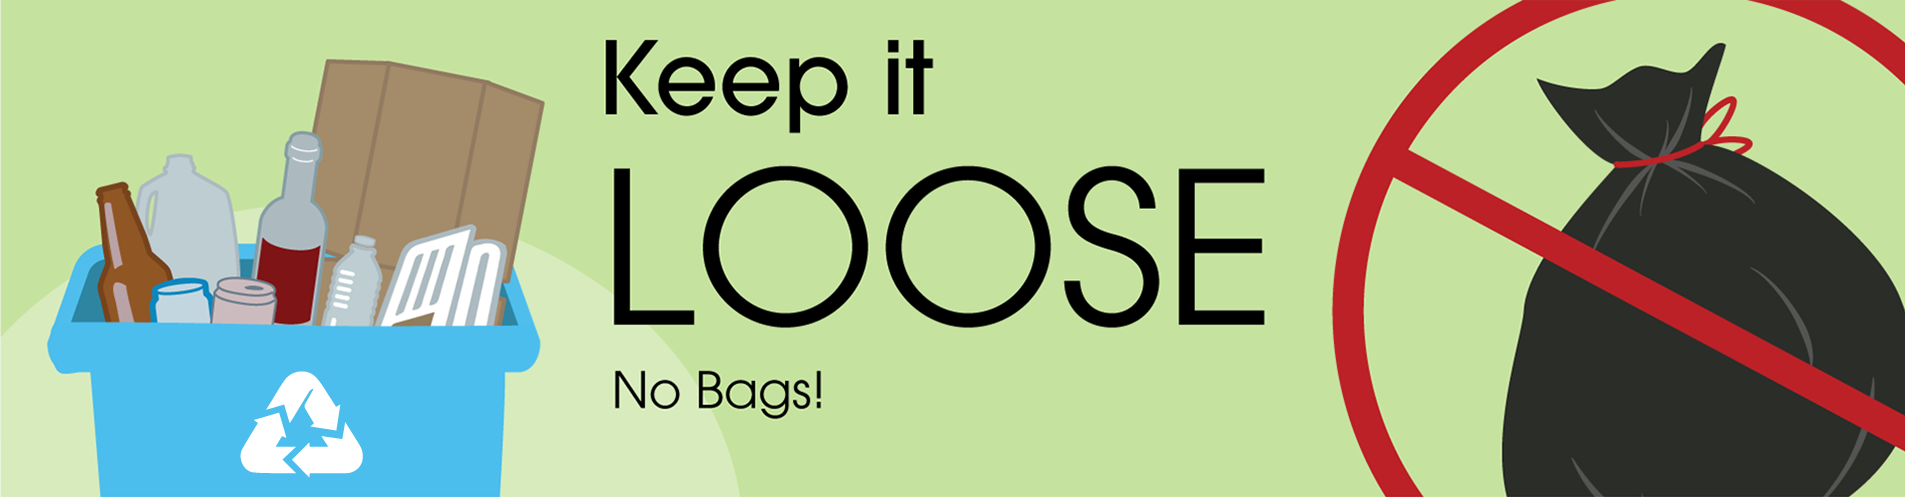 Keep it loose, no bags!